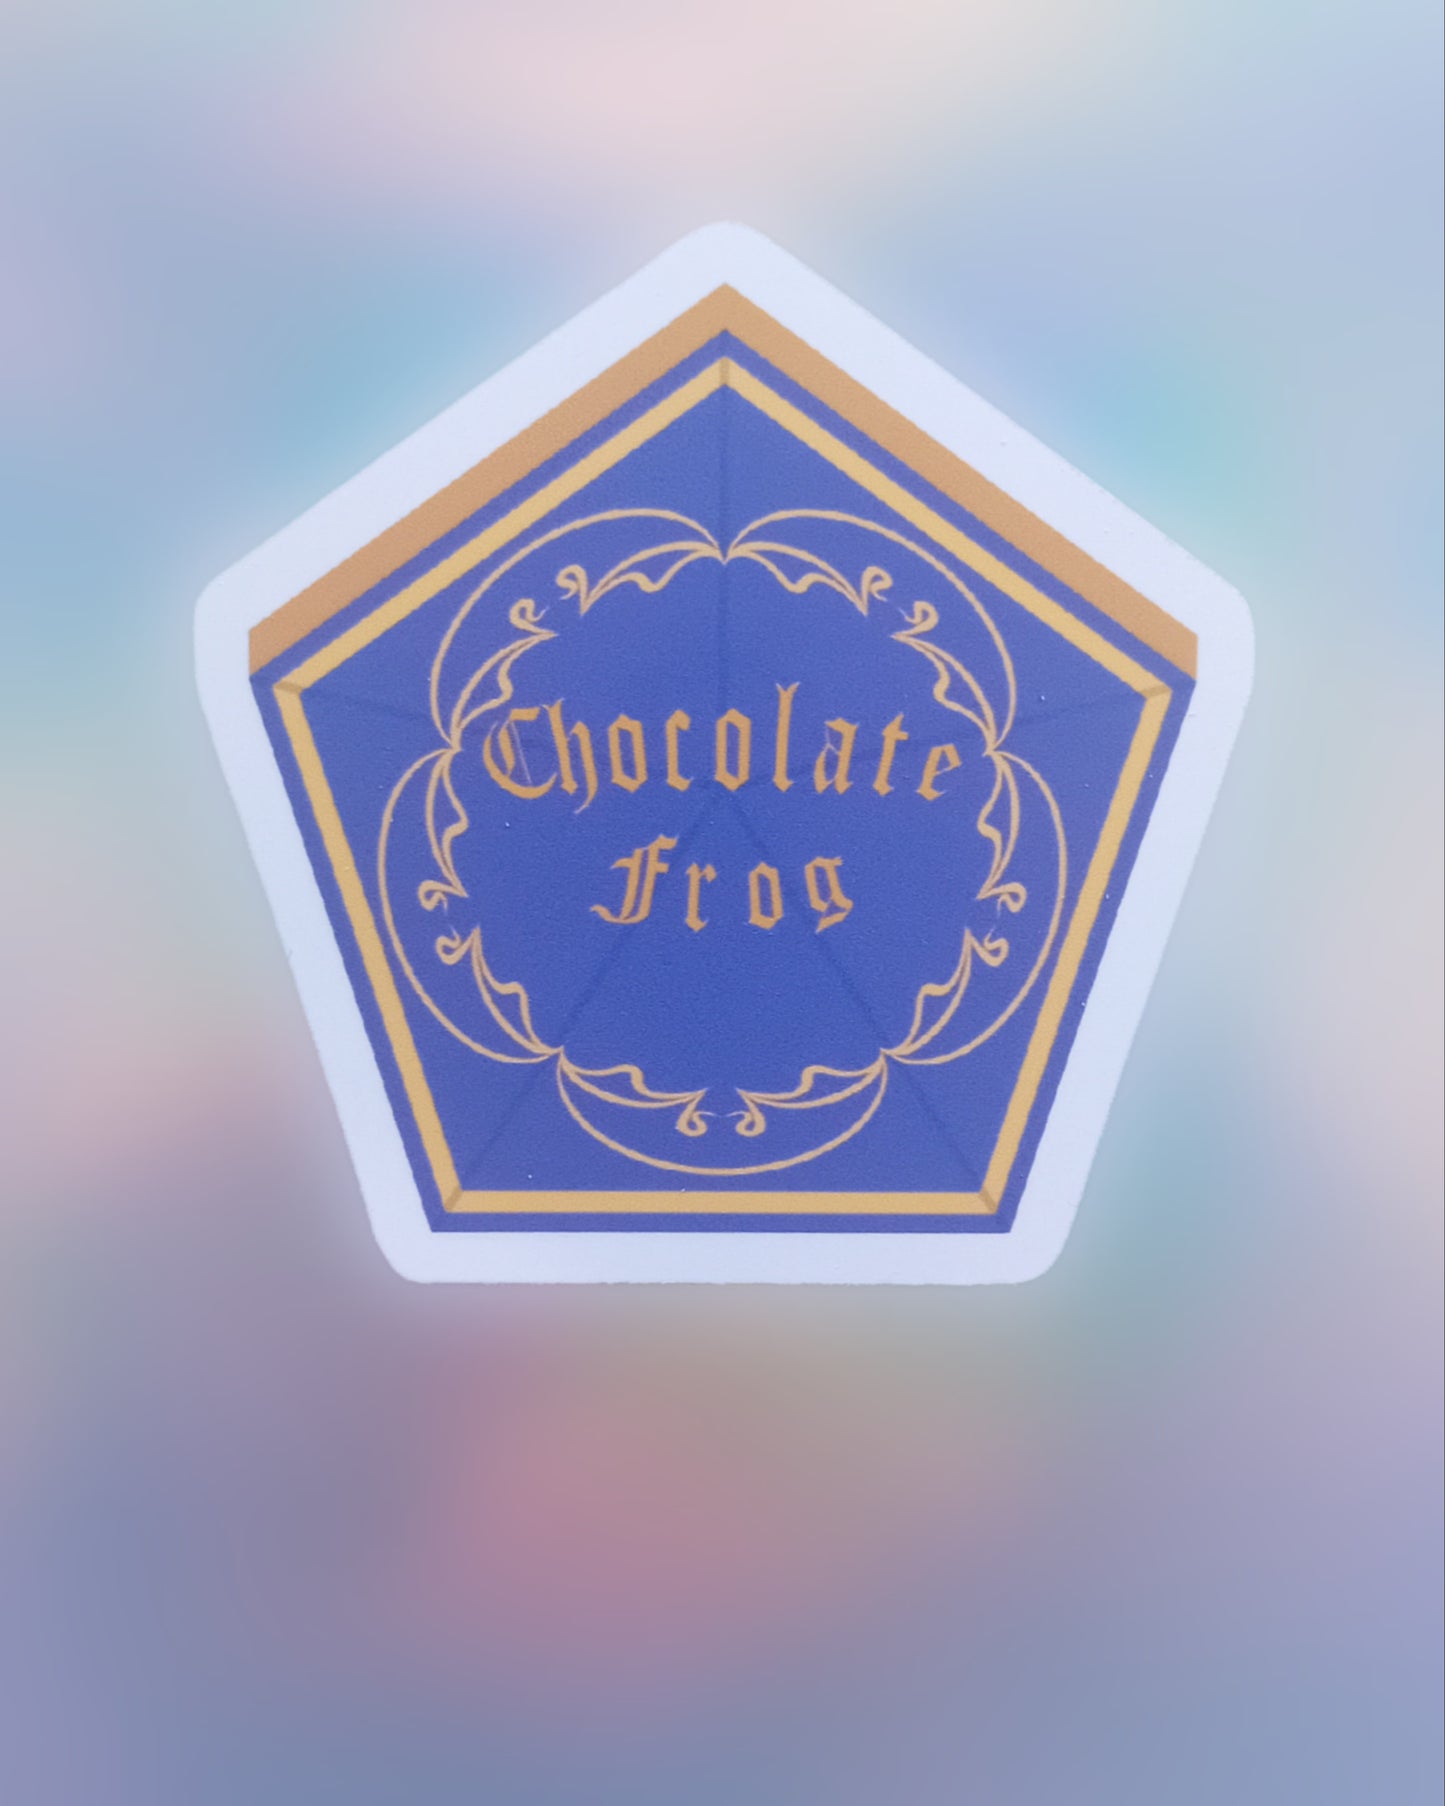 Fan Club Chocolate Frog Vinyl Sticker